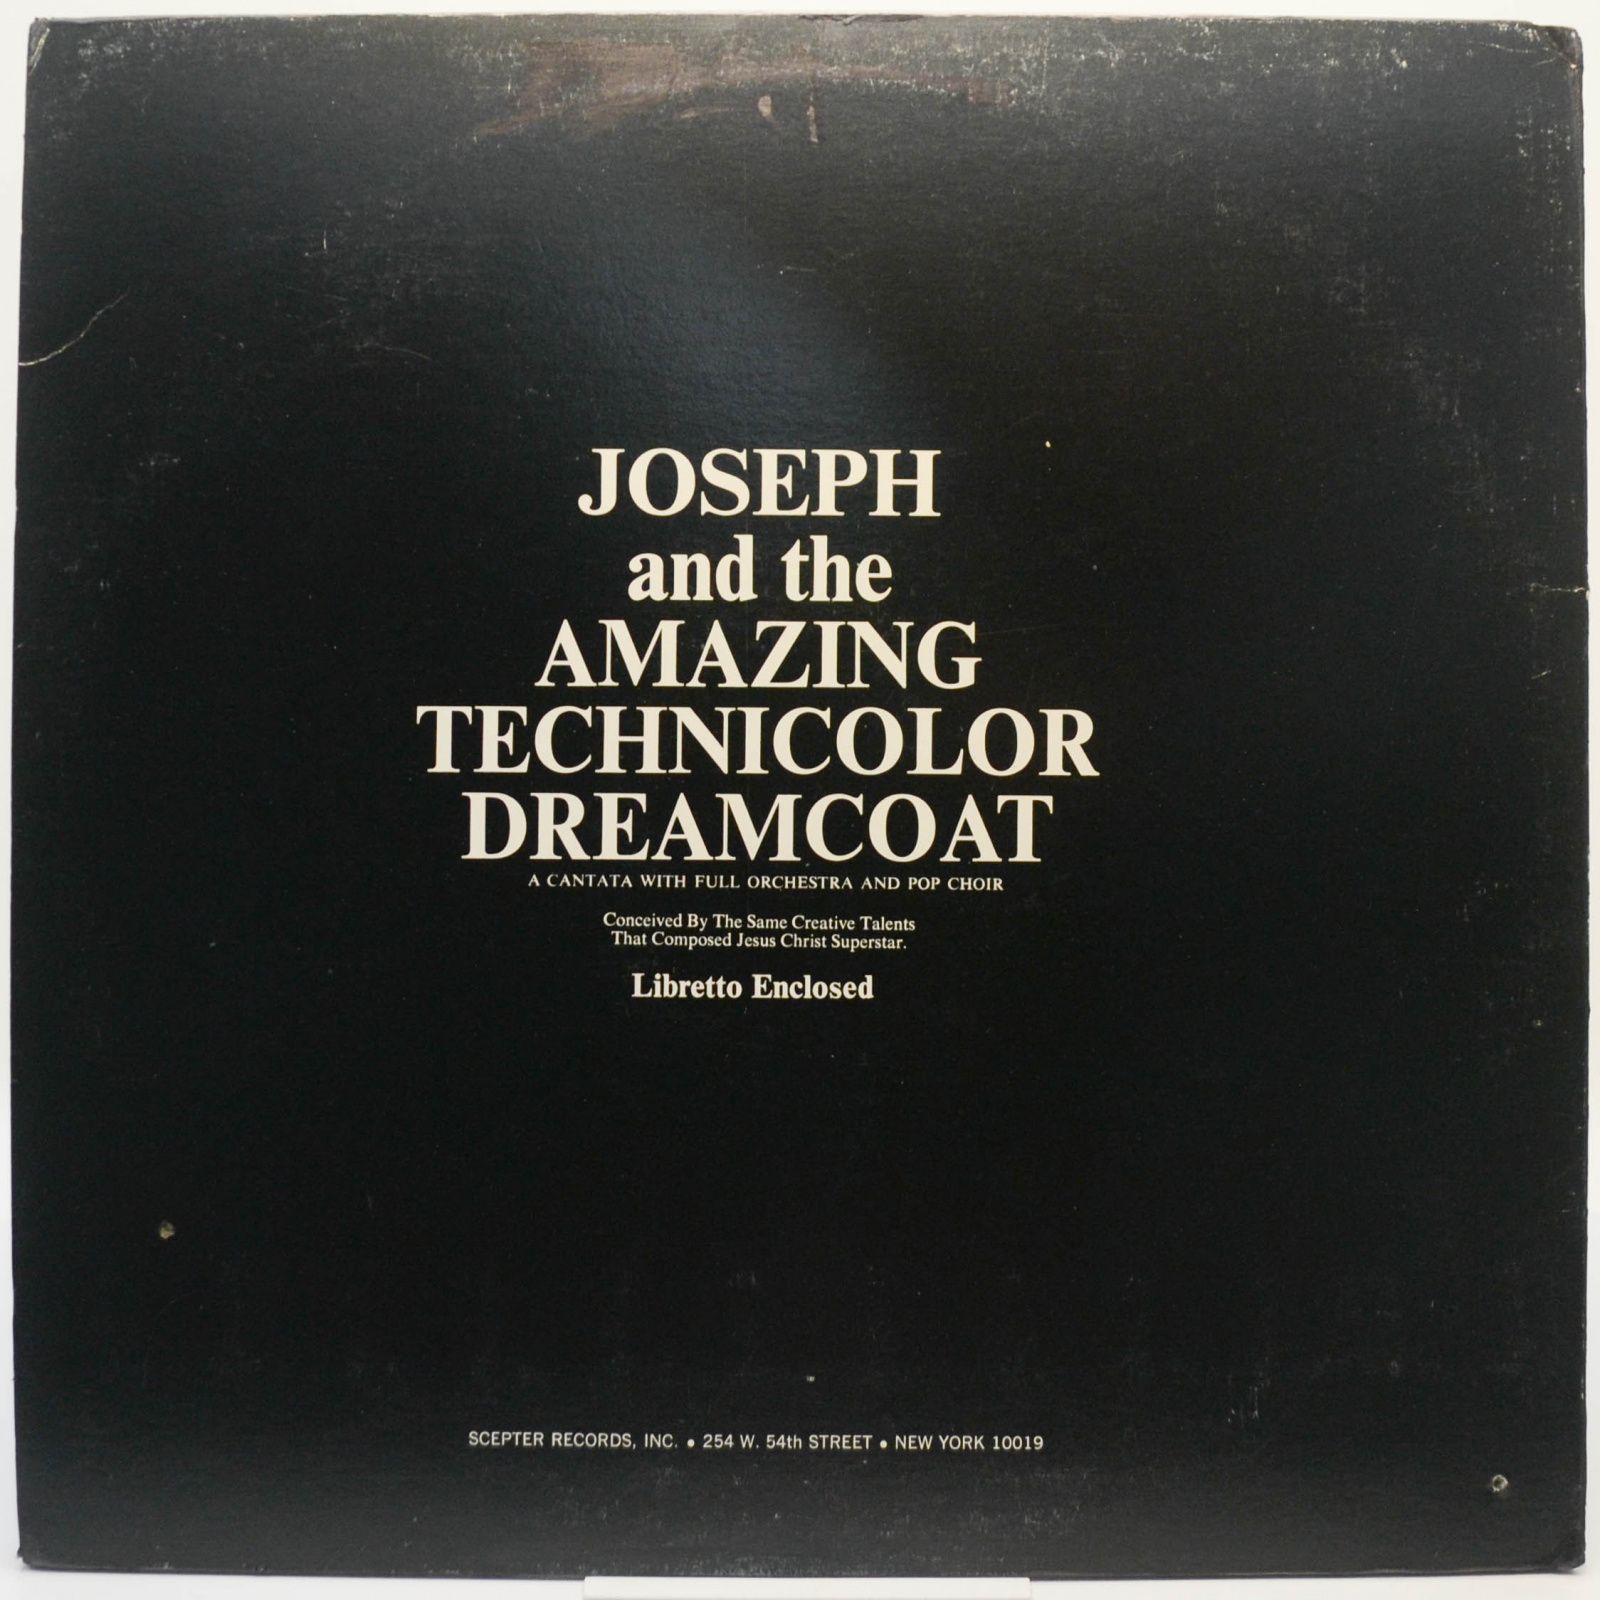 Joseph Consortium, Andrew Lloyd Webber, Tim Rice — Joseph And The Amazing Technicolor Dreamcoat (USA), 1971